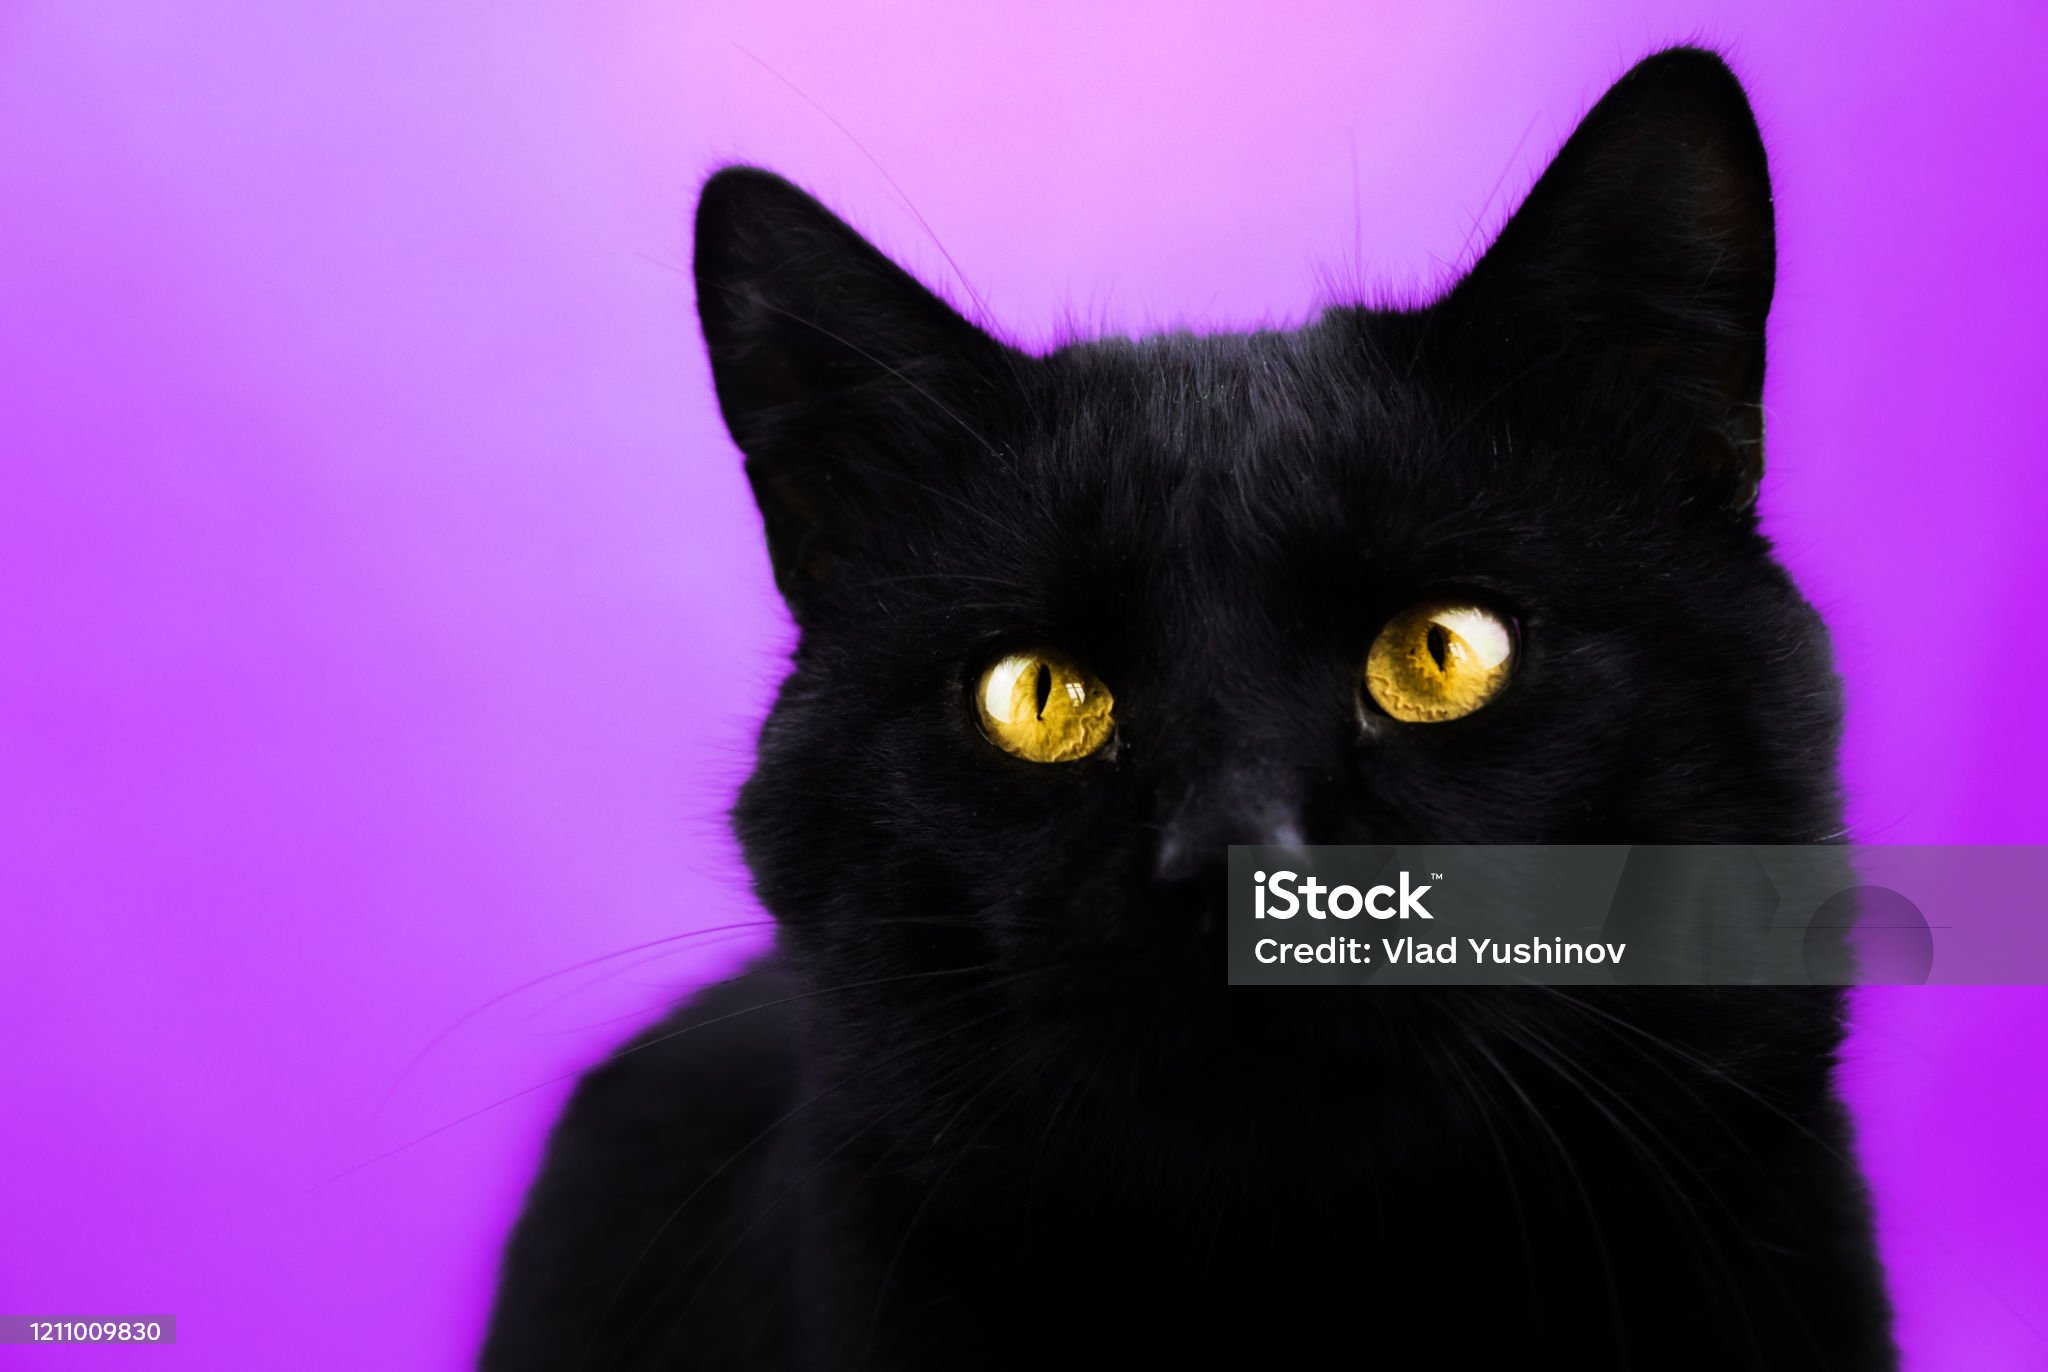 portrait-of-a-black-cat-on-a-simple-purple-background.jpg